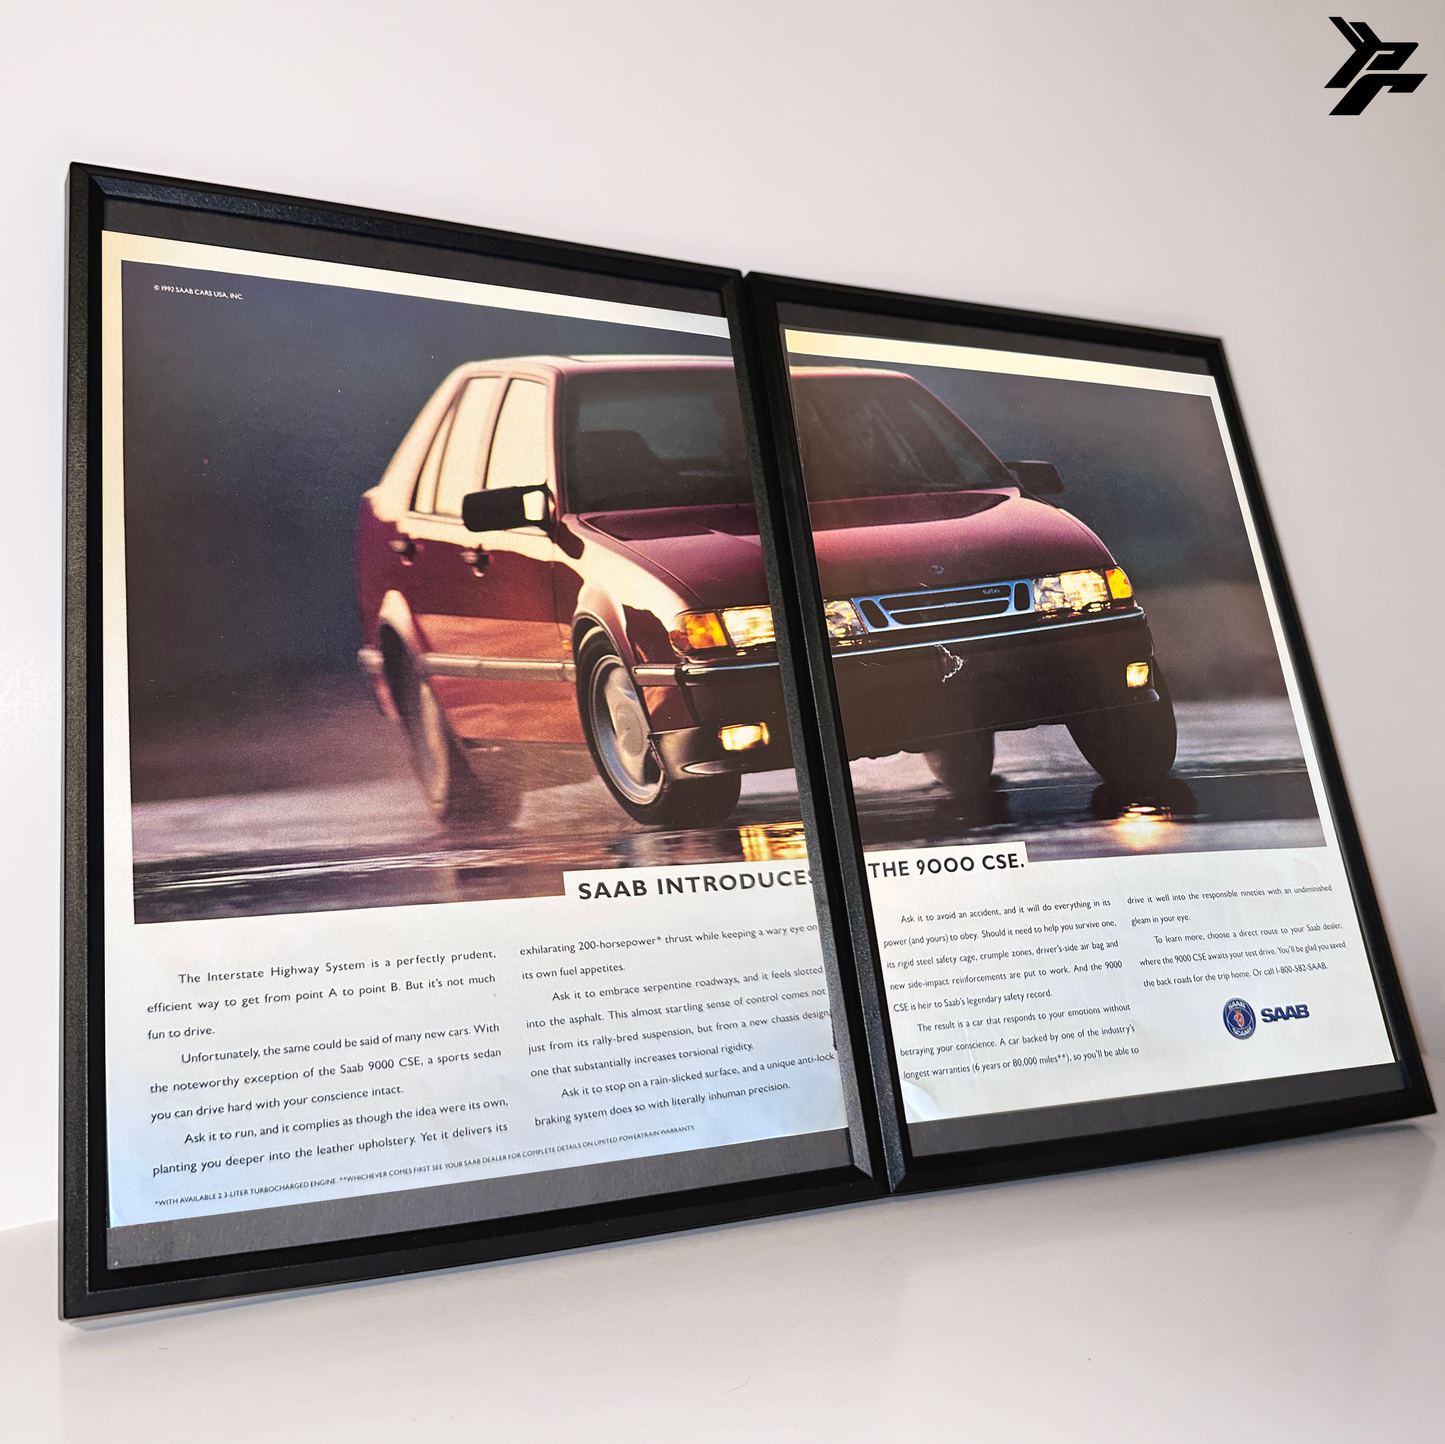 Saab introducing the 9000 cse framed ad